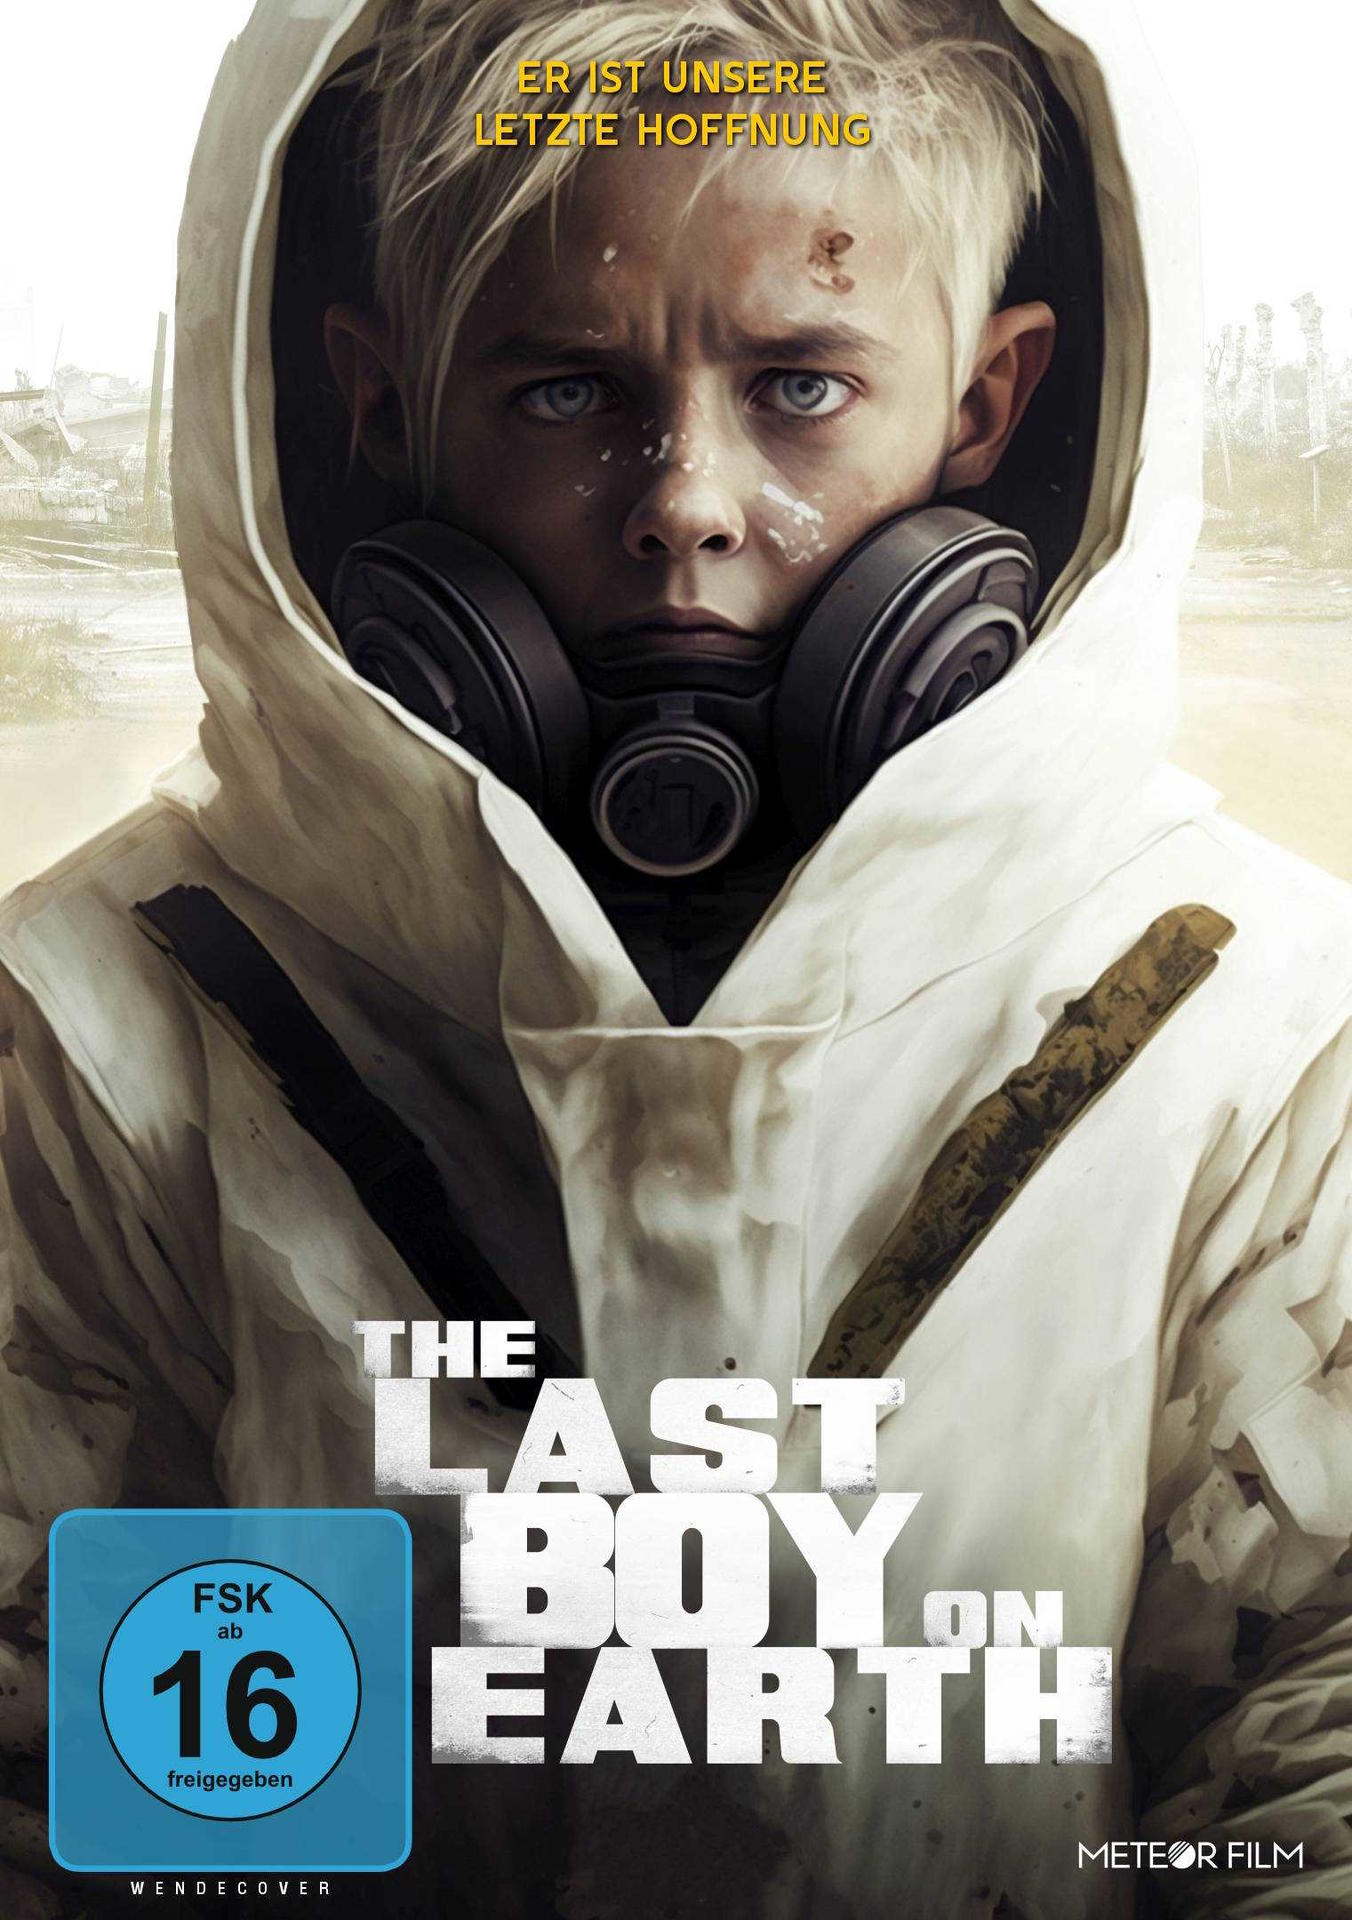 Last DVD The Boy on Earth